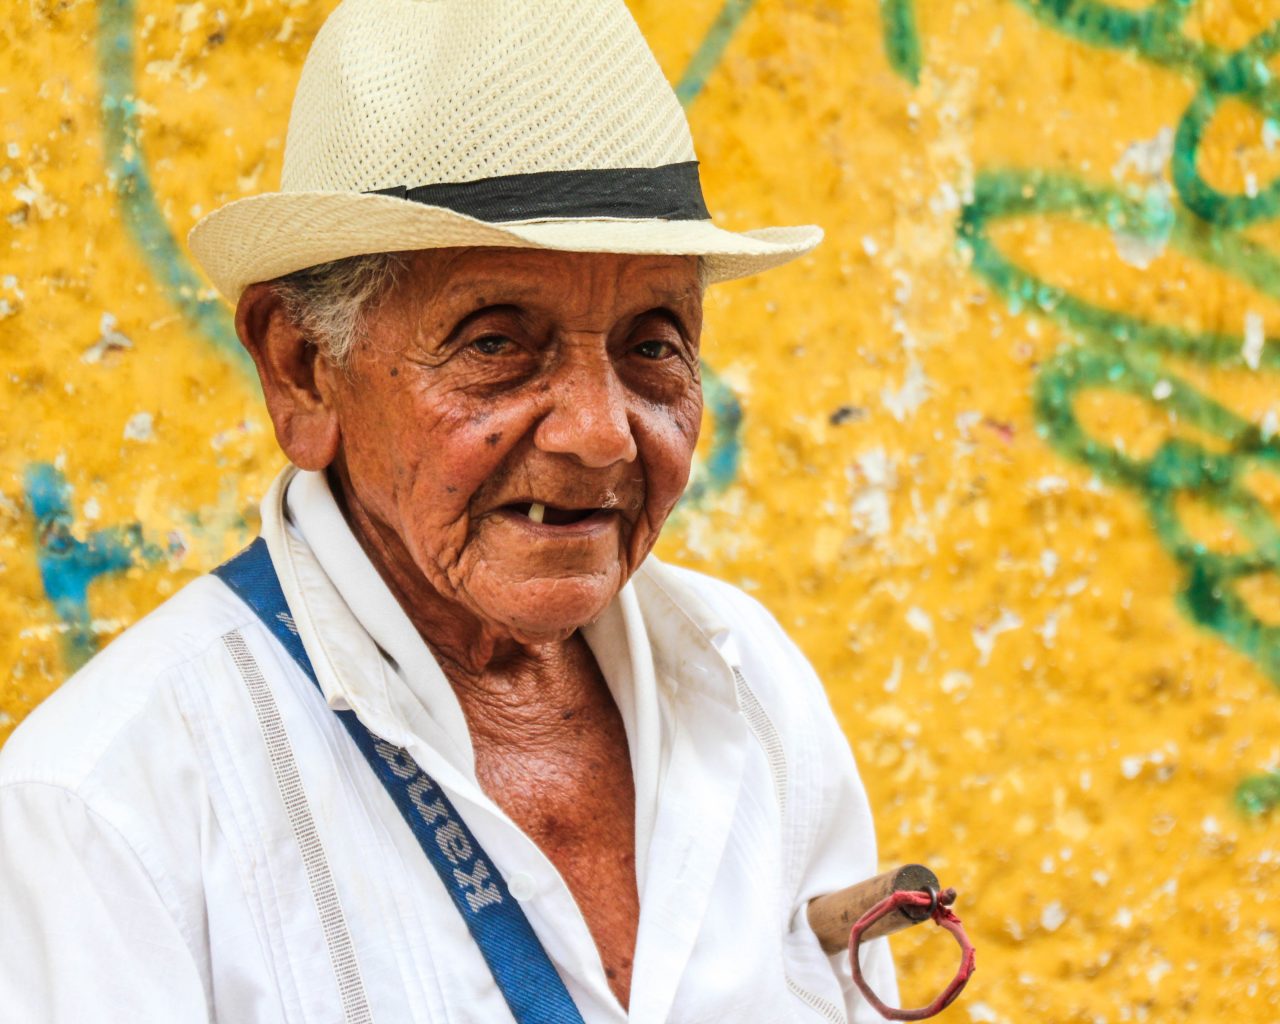 Mensen-fotograferen-op-reis-Cartagena-Colombia